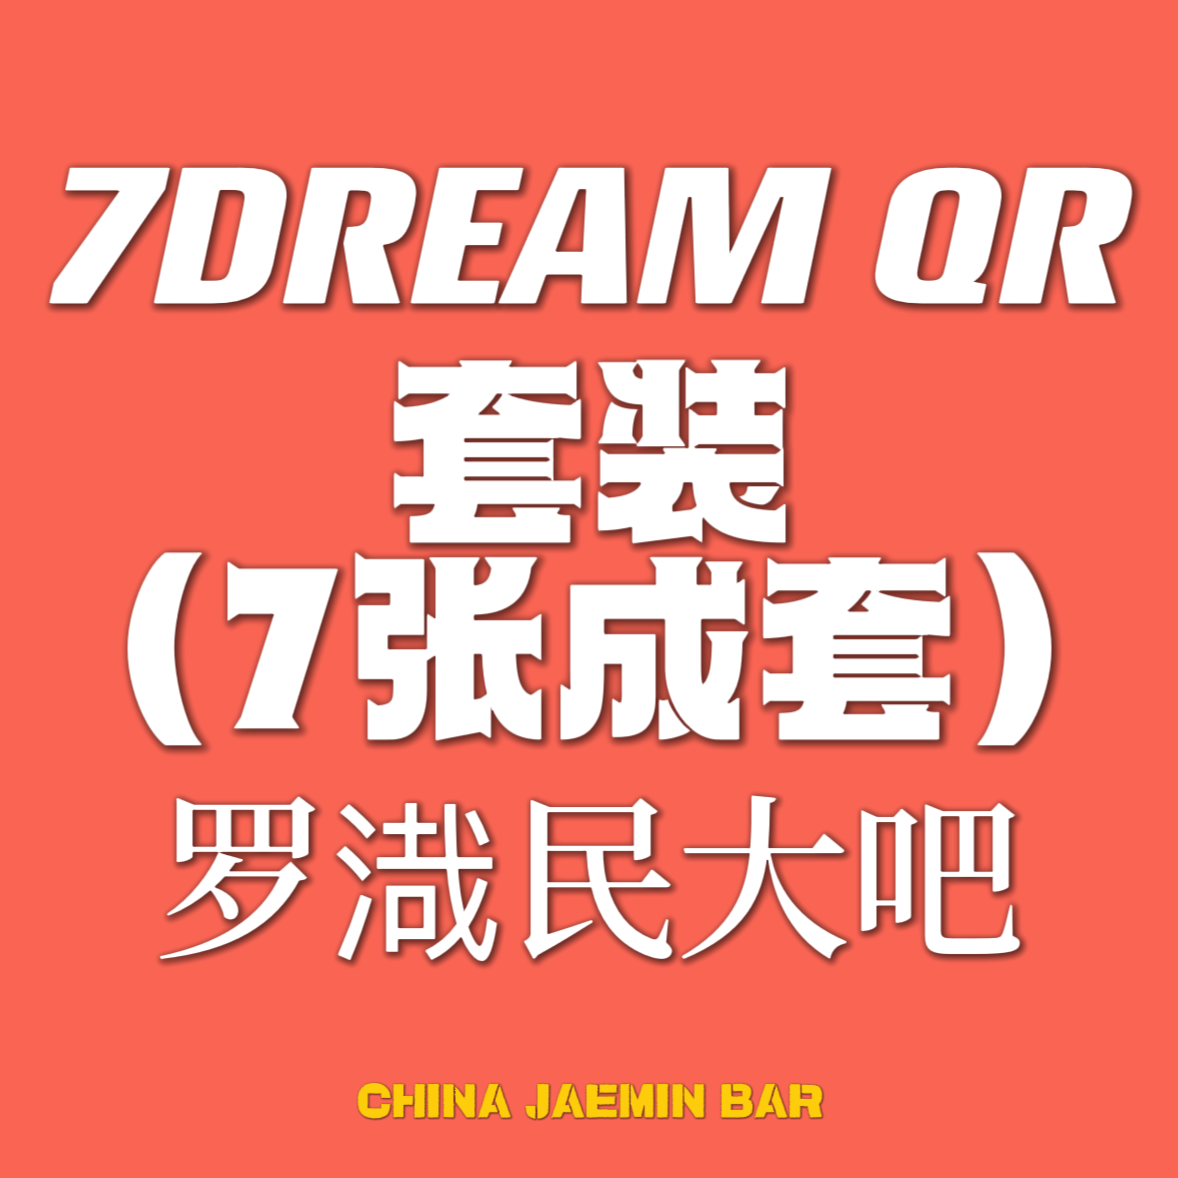 [全款 裸专] [7CD 套装] NCT DREAM - 正规3辑 [ISTJ] (7DREAM QR Ver.) (Smart Album)_罗渽民吧